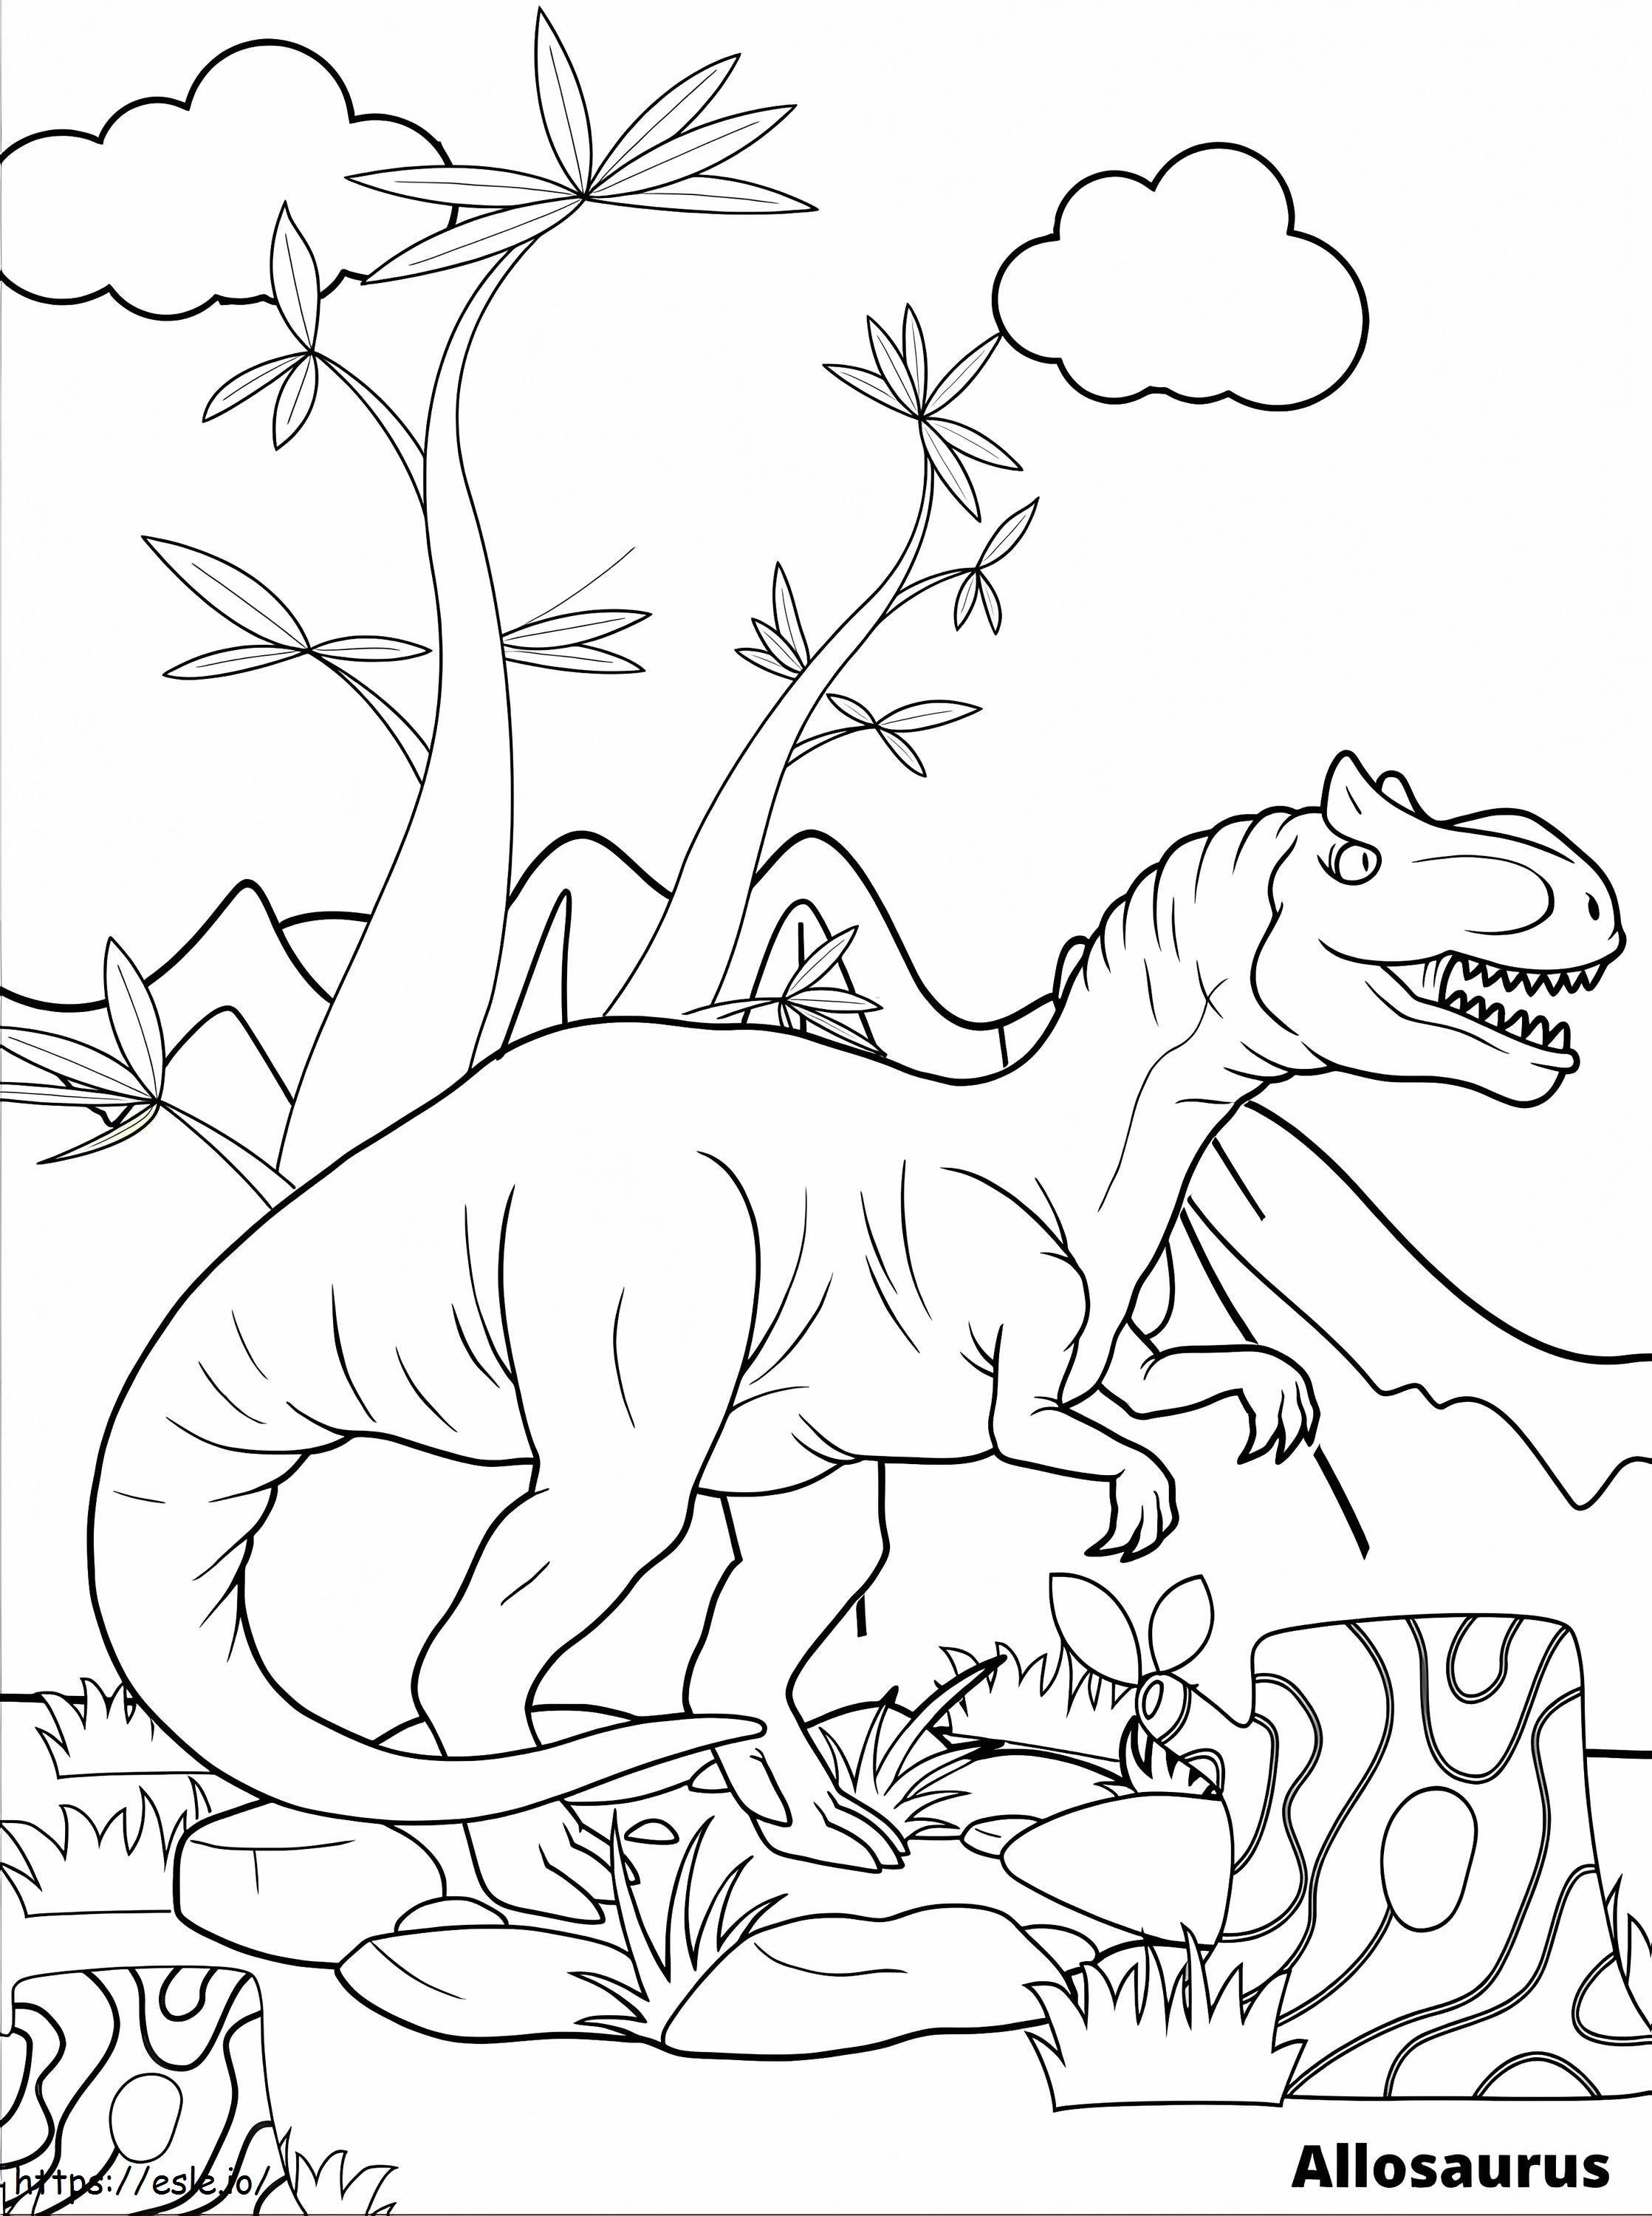 Allosaurus 6 coloring page